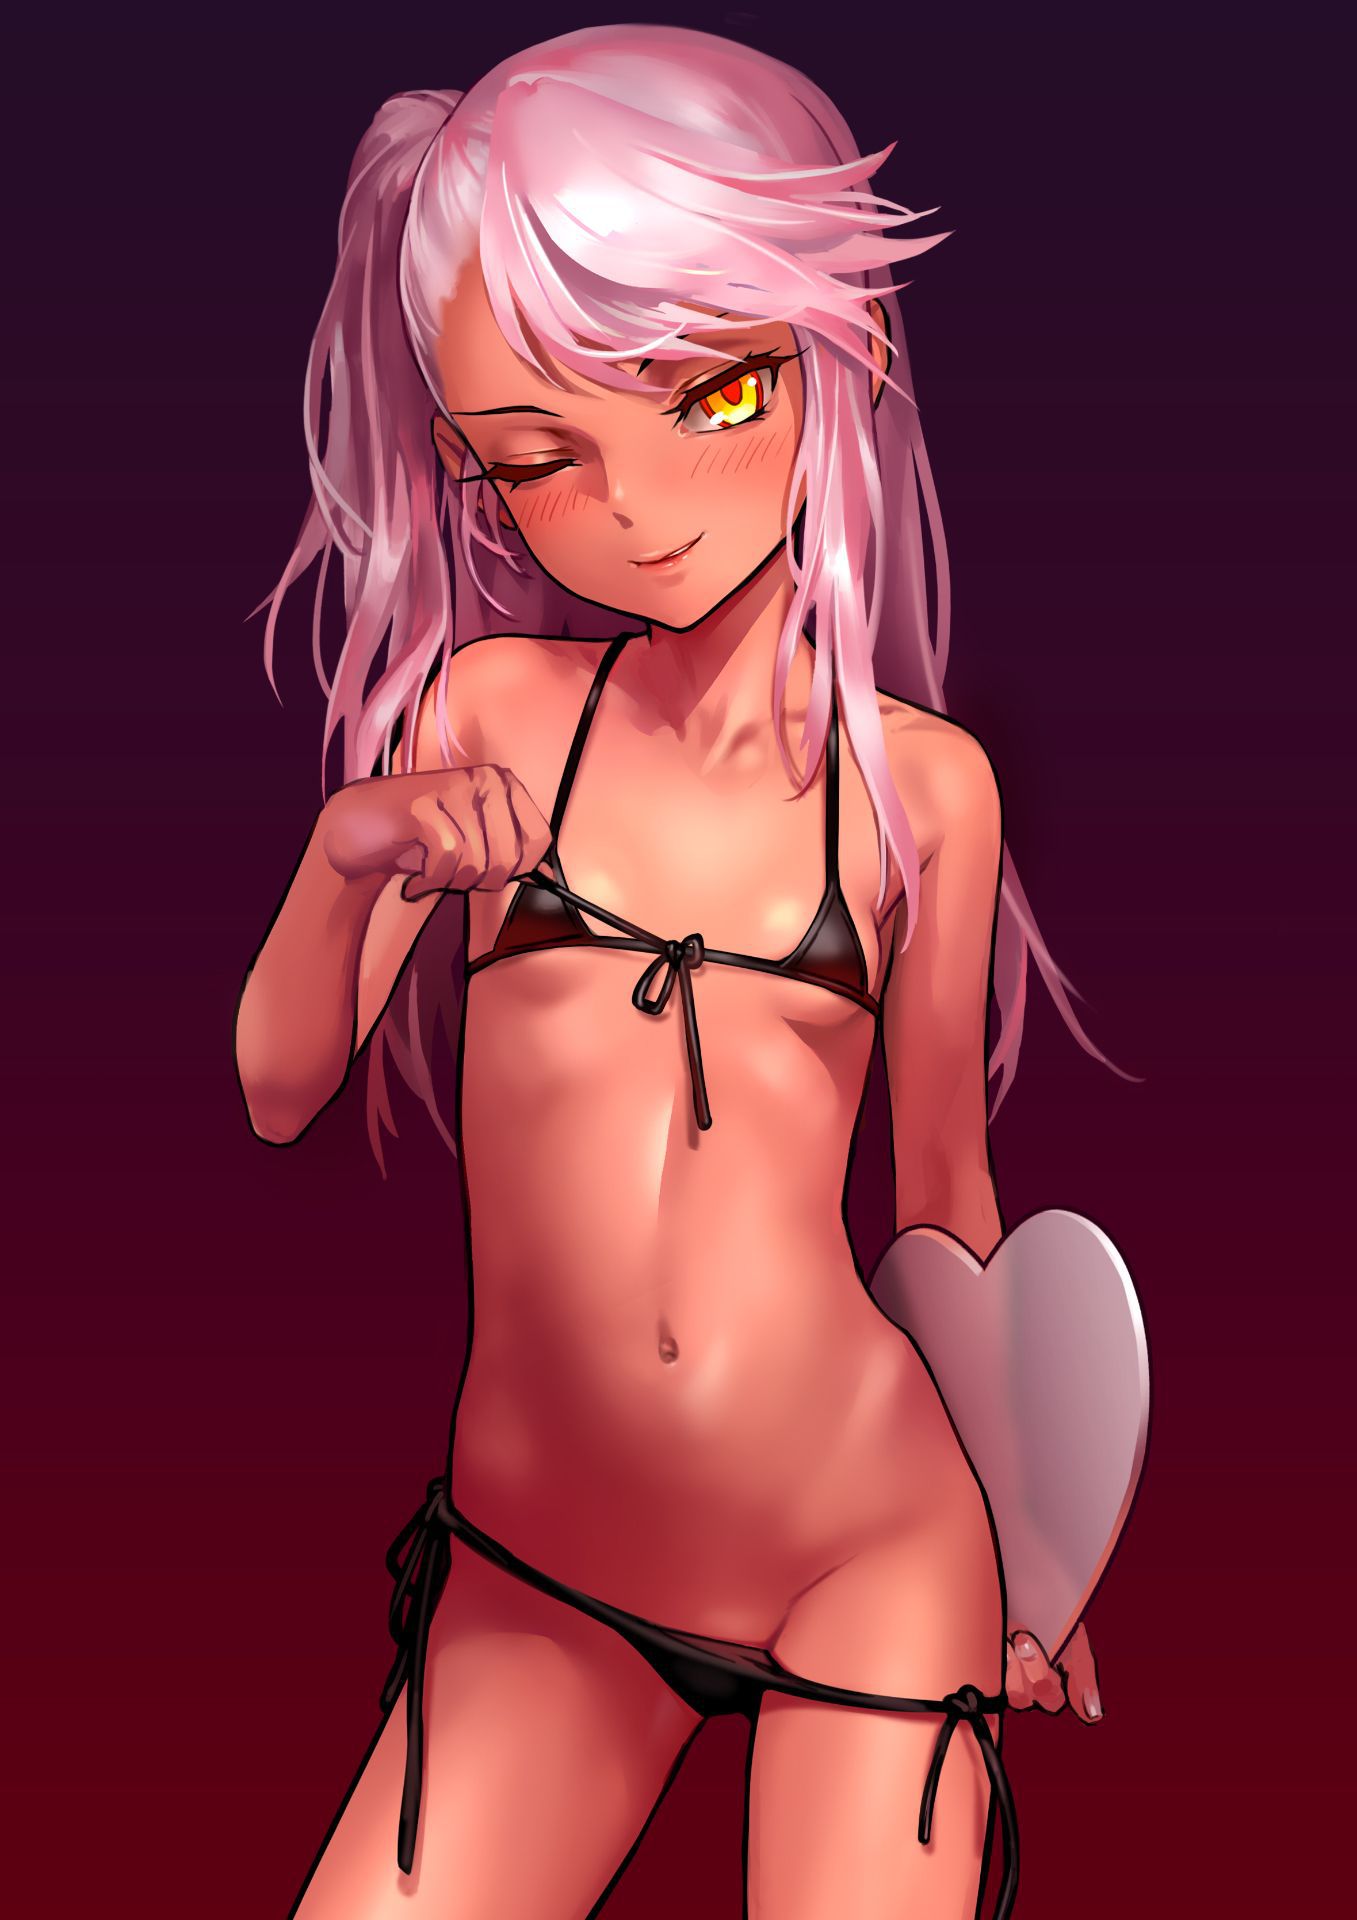 Secondary erotic images of girls wearing erotic underwear and costume 13 [Naughty Shitagi] 27